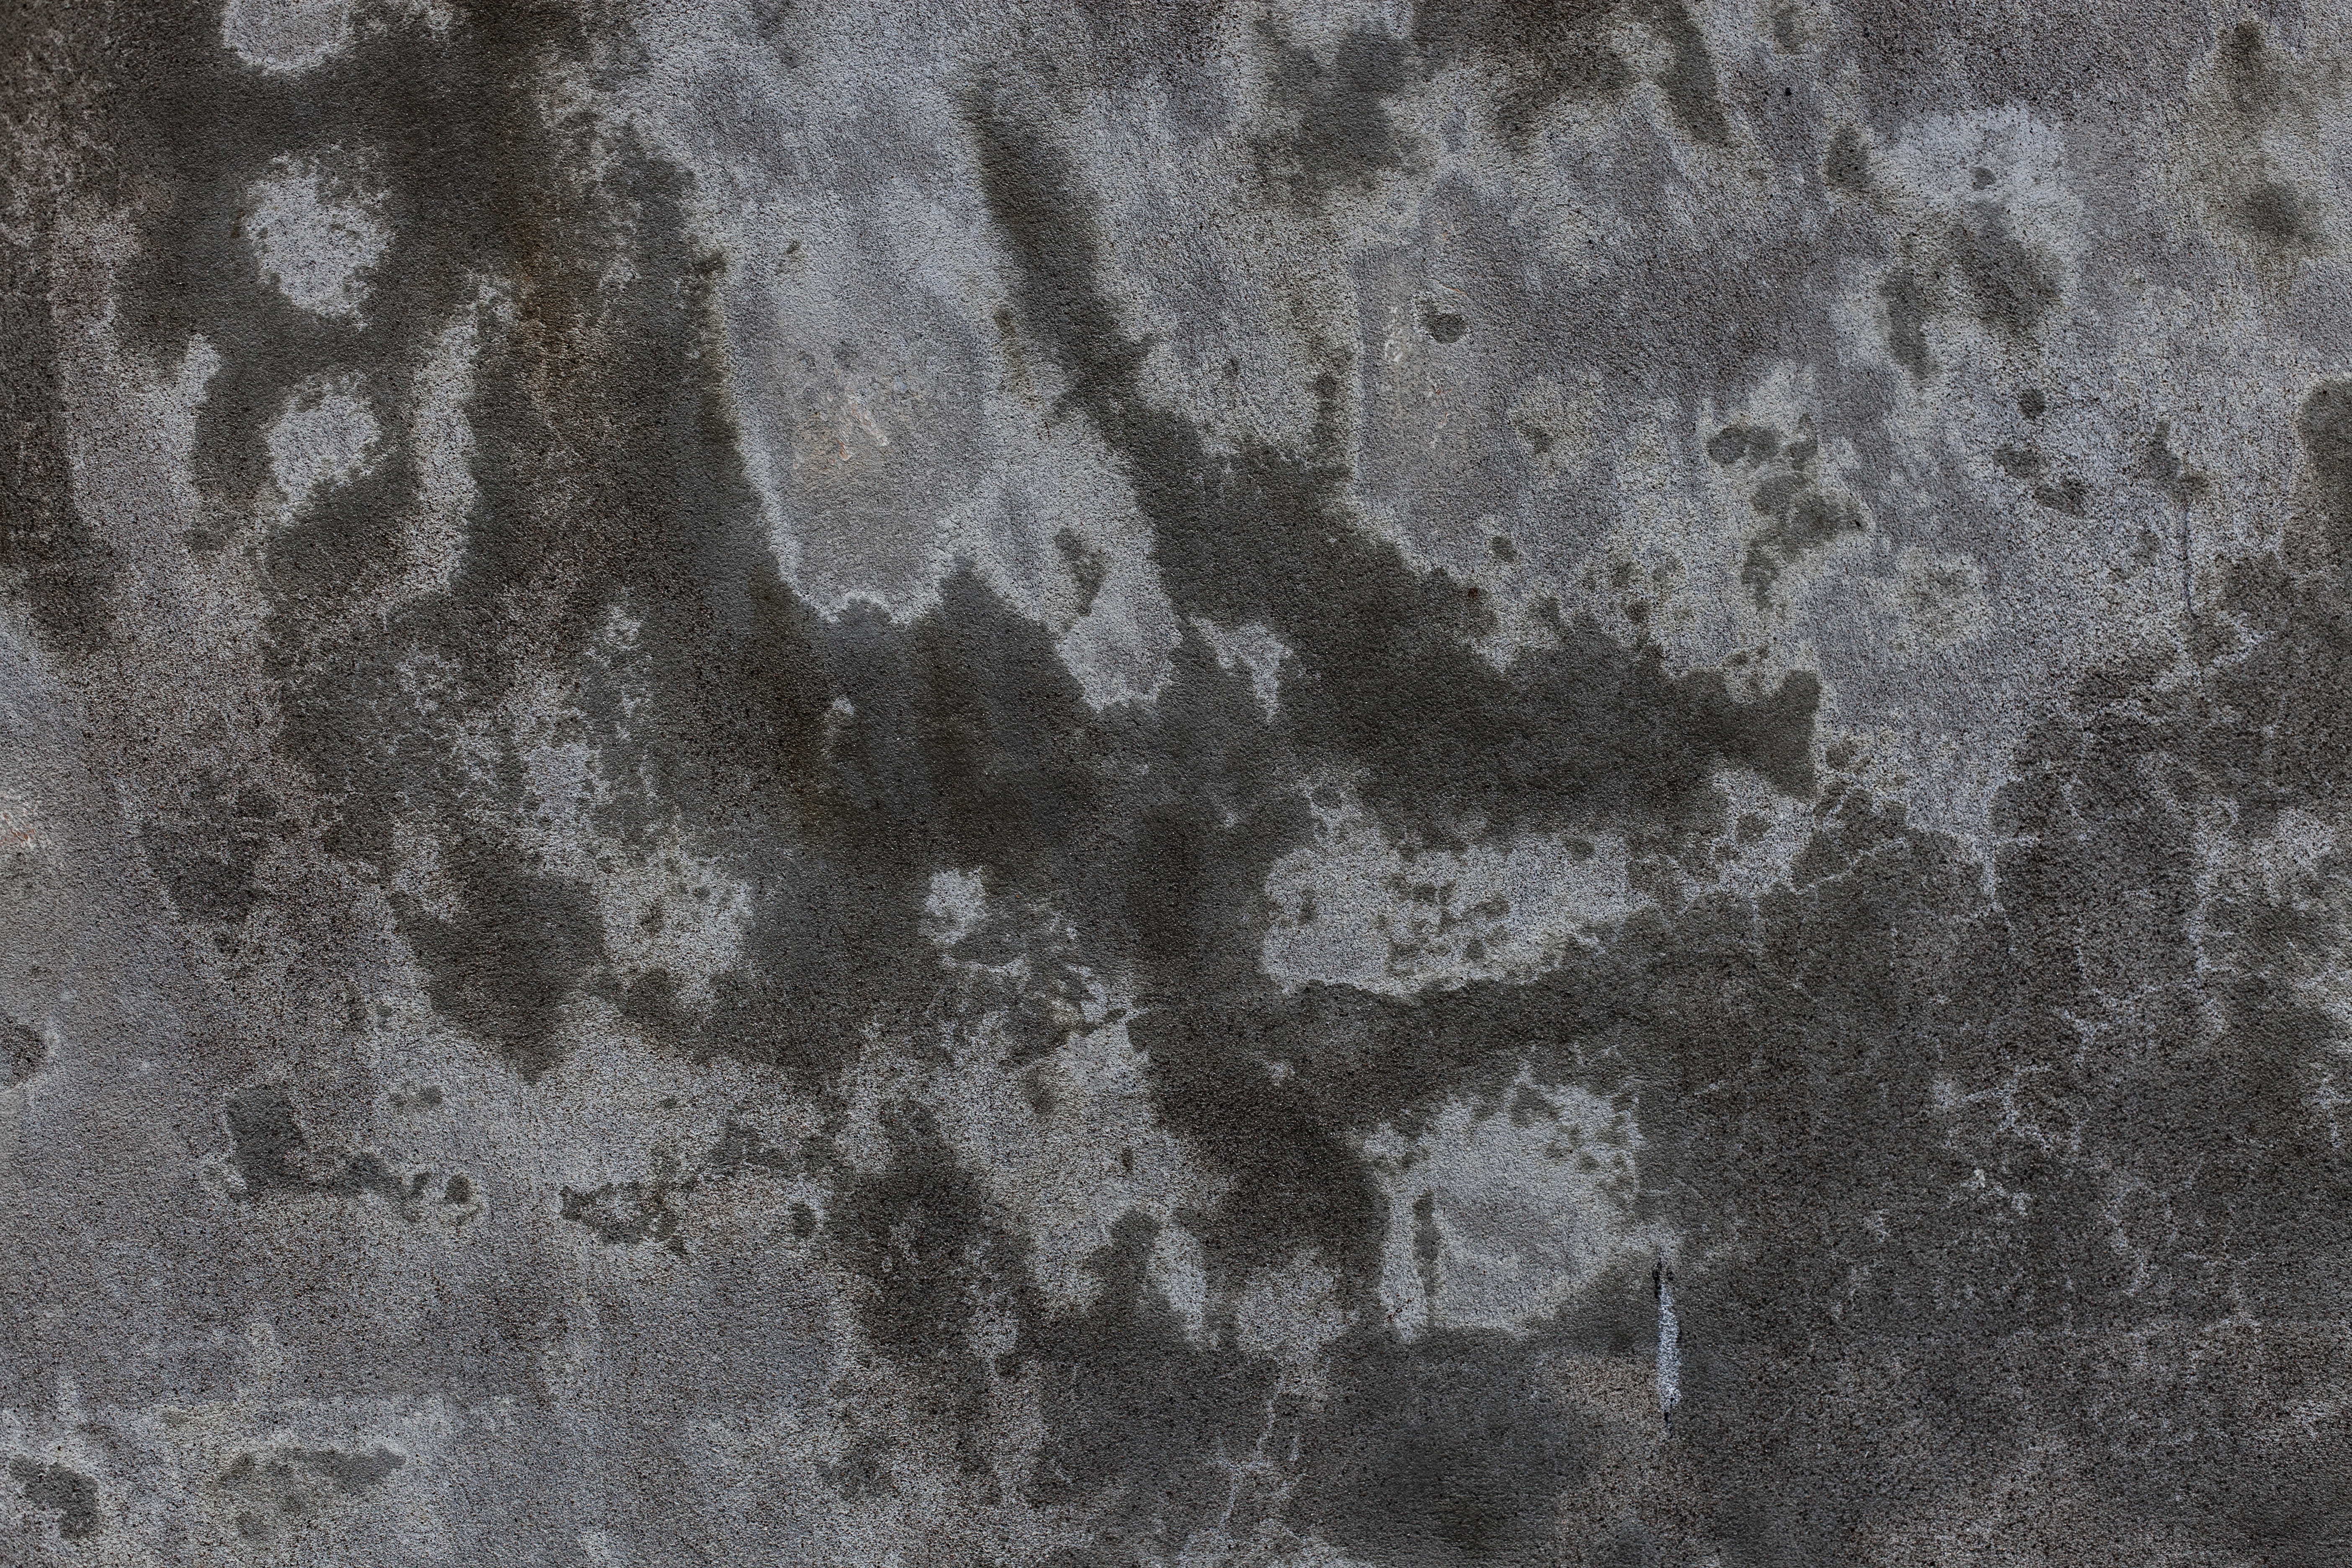 Grunge cracked concrete texture photo